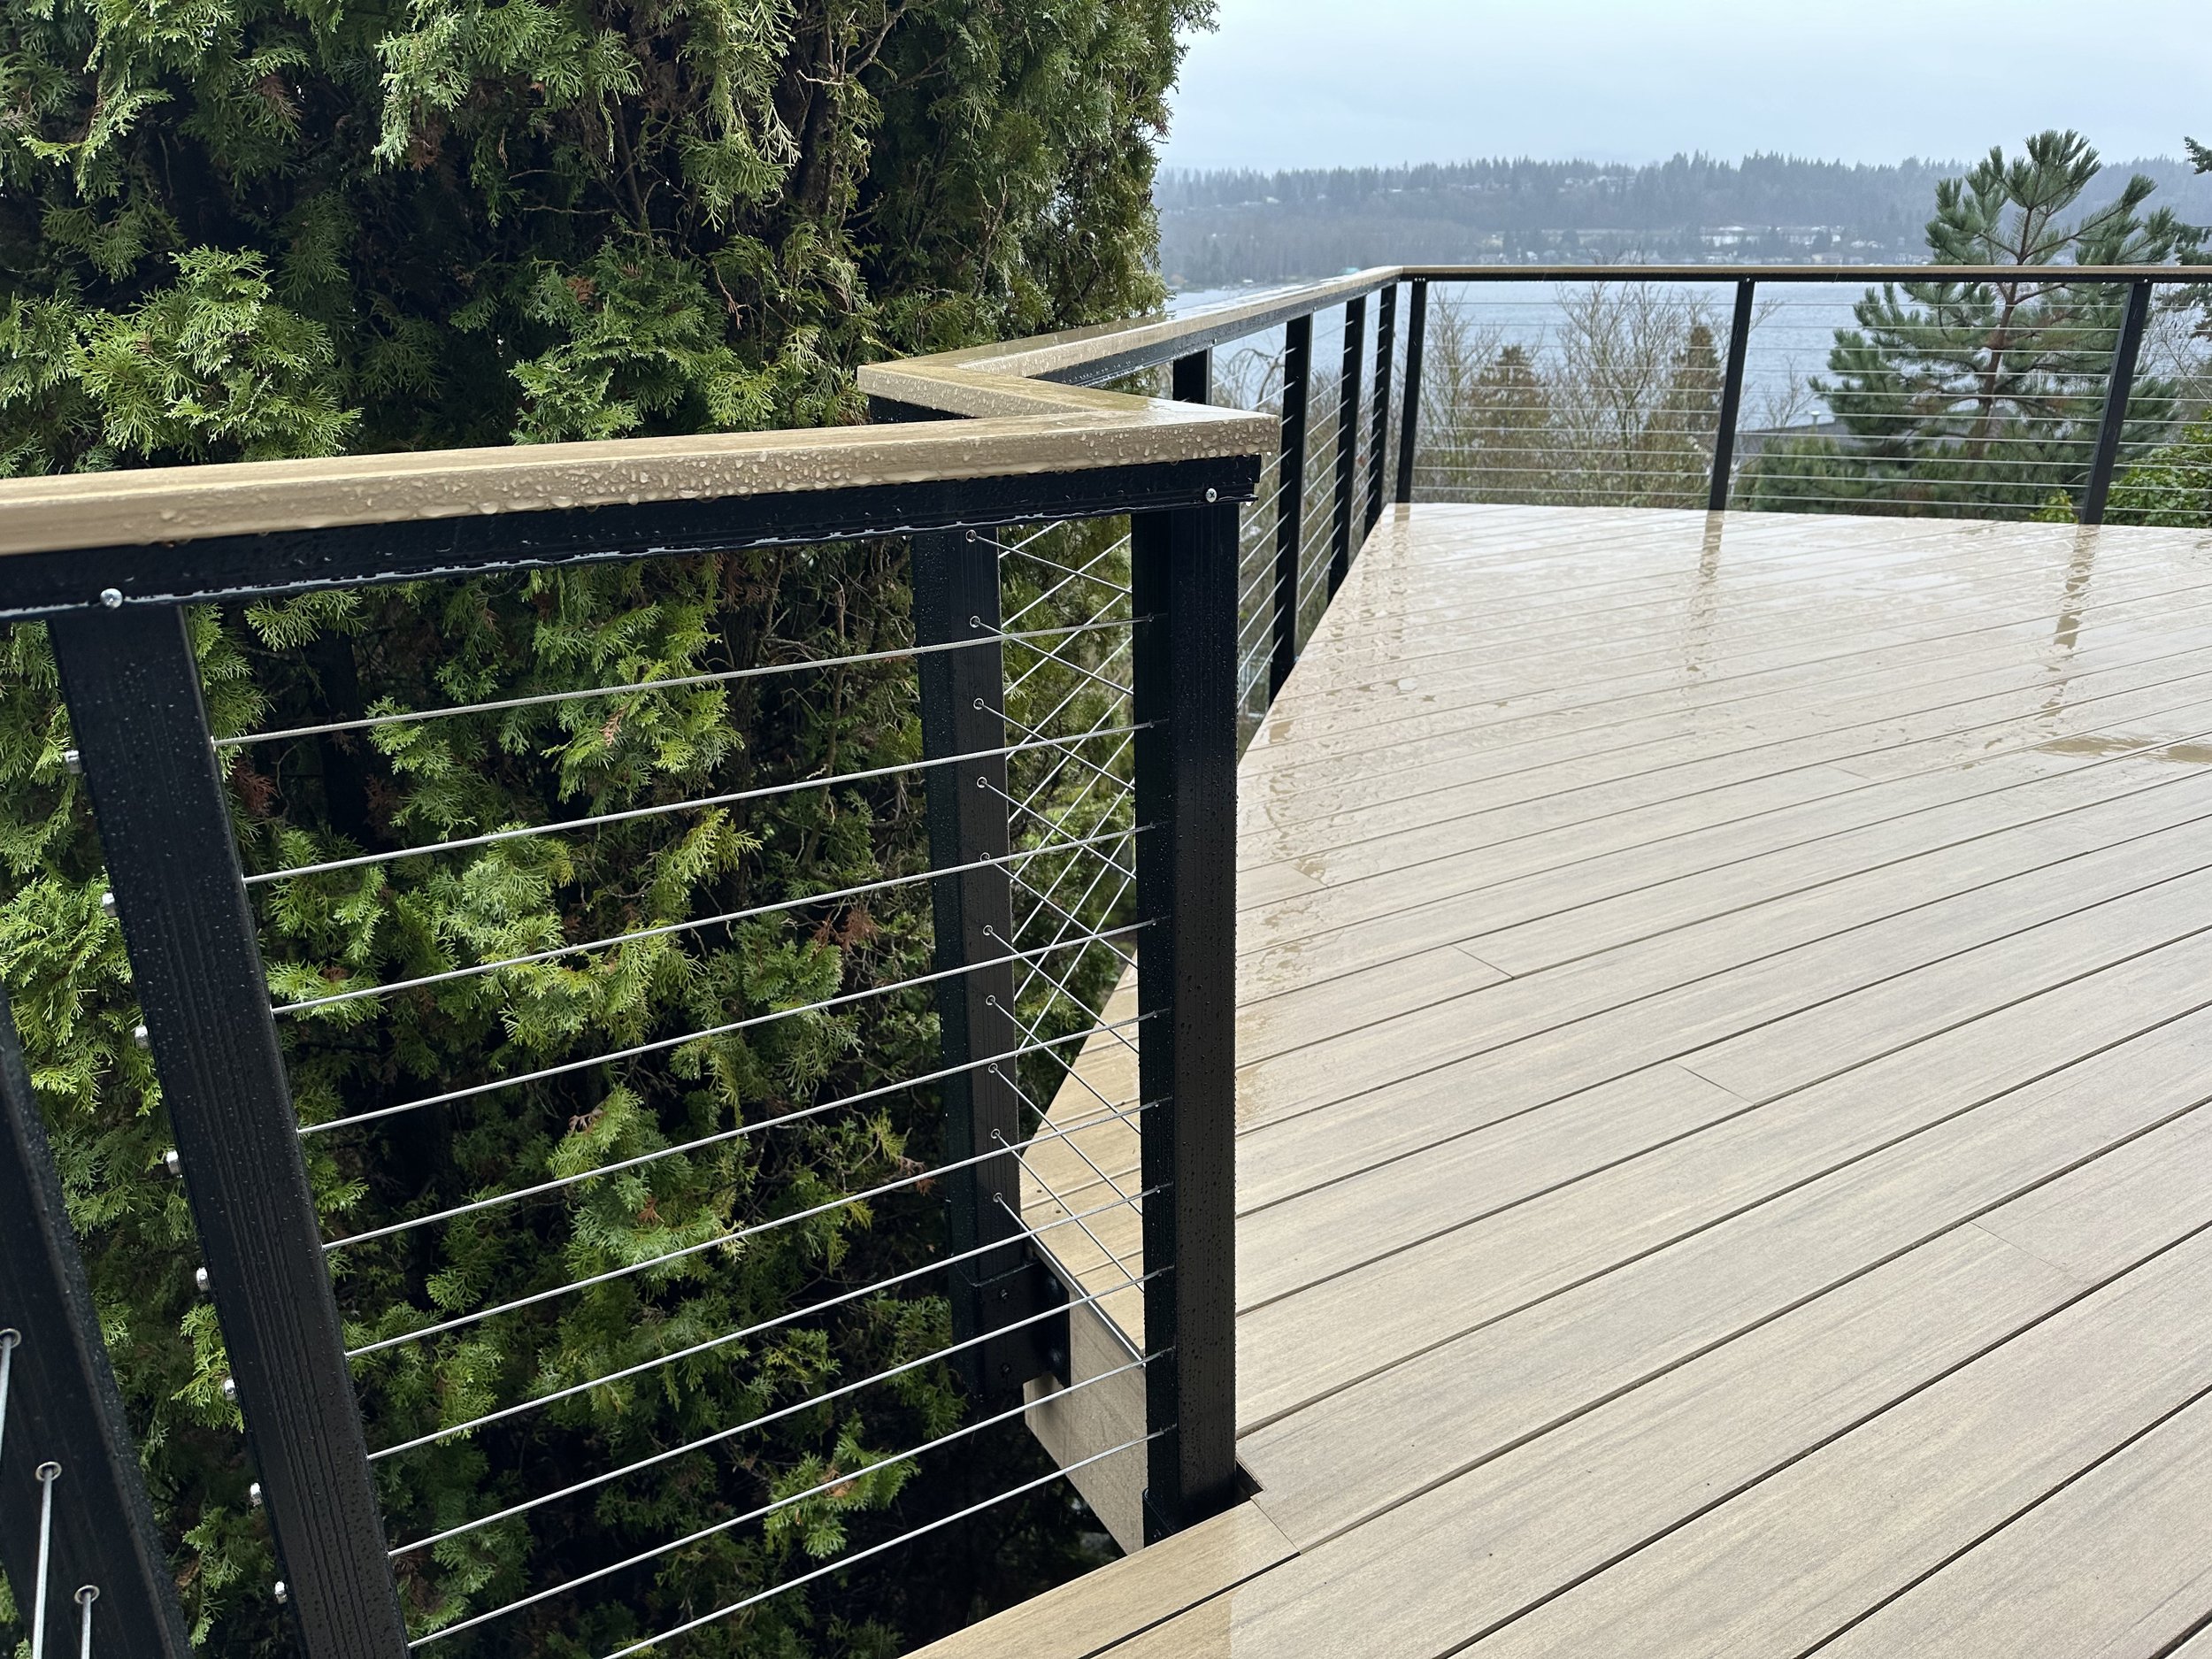  deck, outdoor living, summer, Baklinski Home Improvement, deck contractors, deck service, Mercer Island, Seattle, Bellevue 